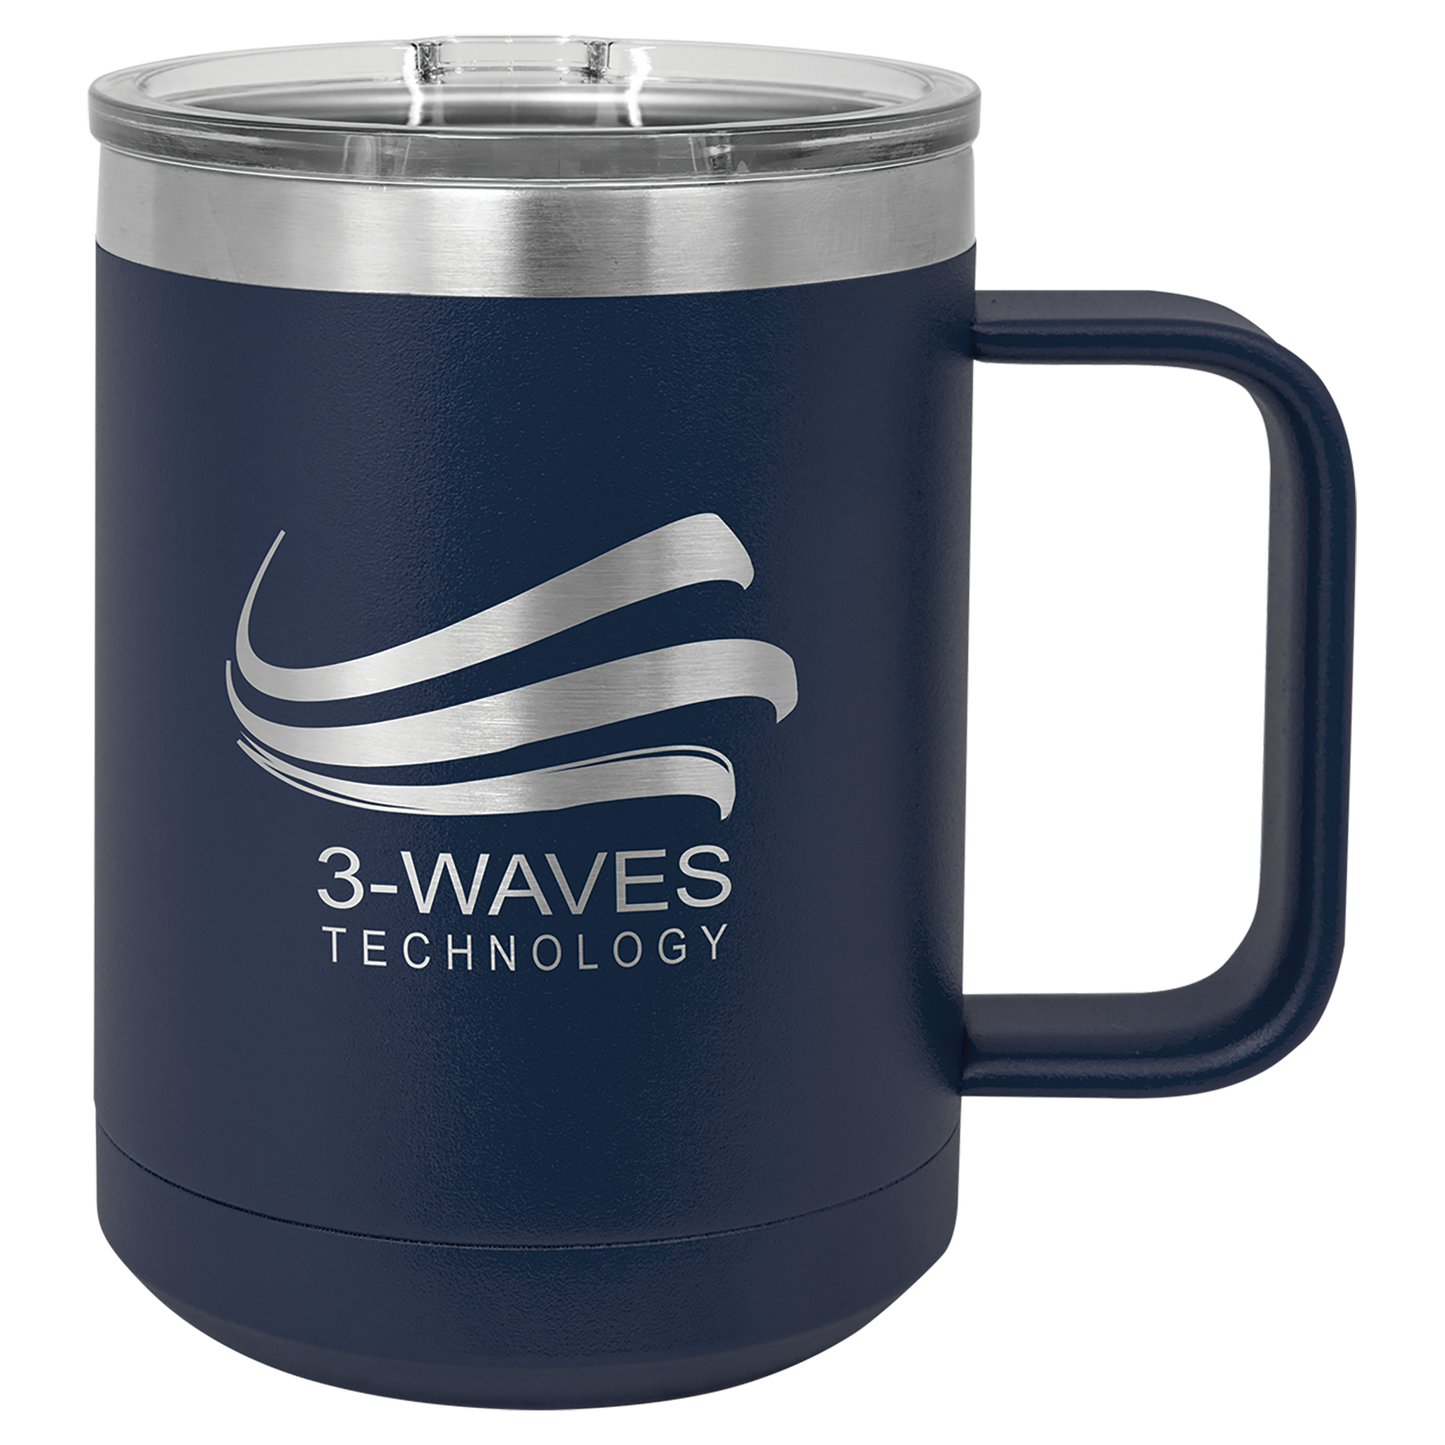 Hansey For Governor 15 oz Mug with Magnetic Lid